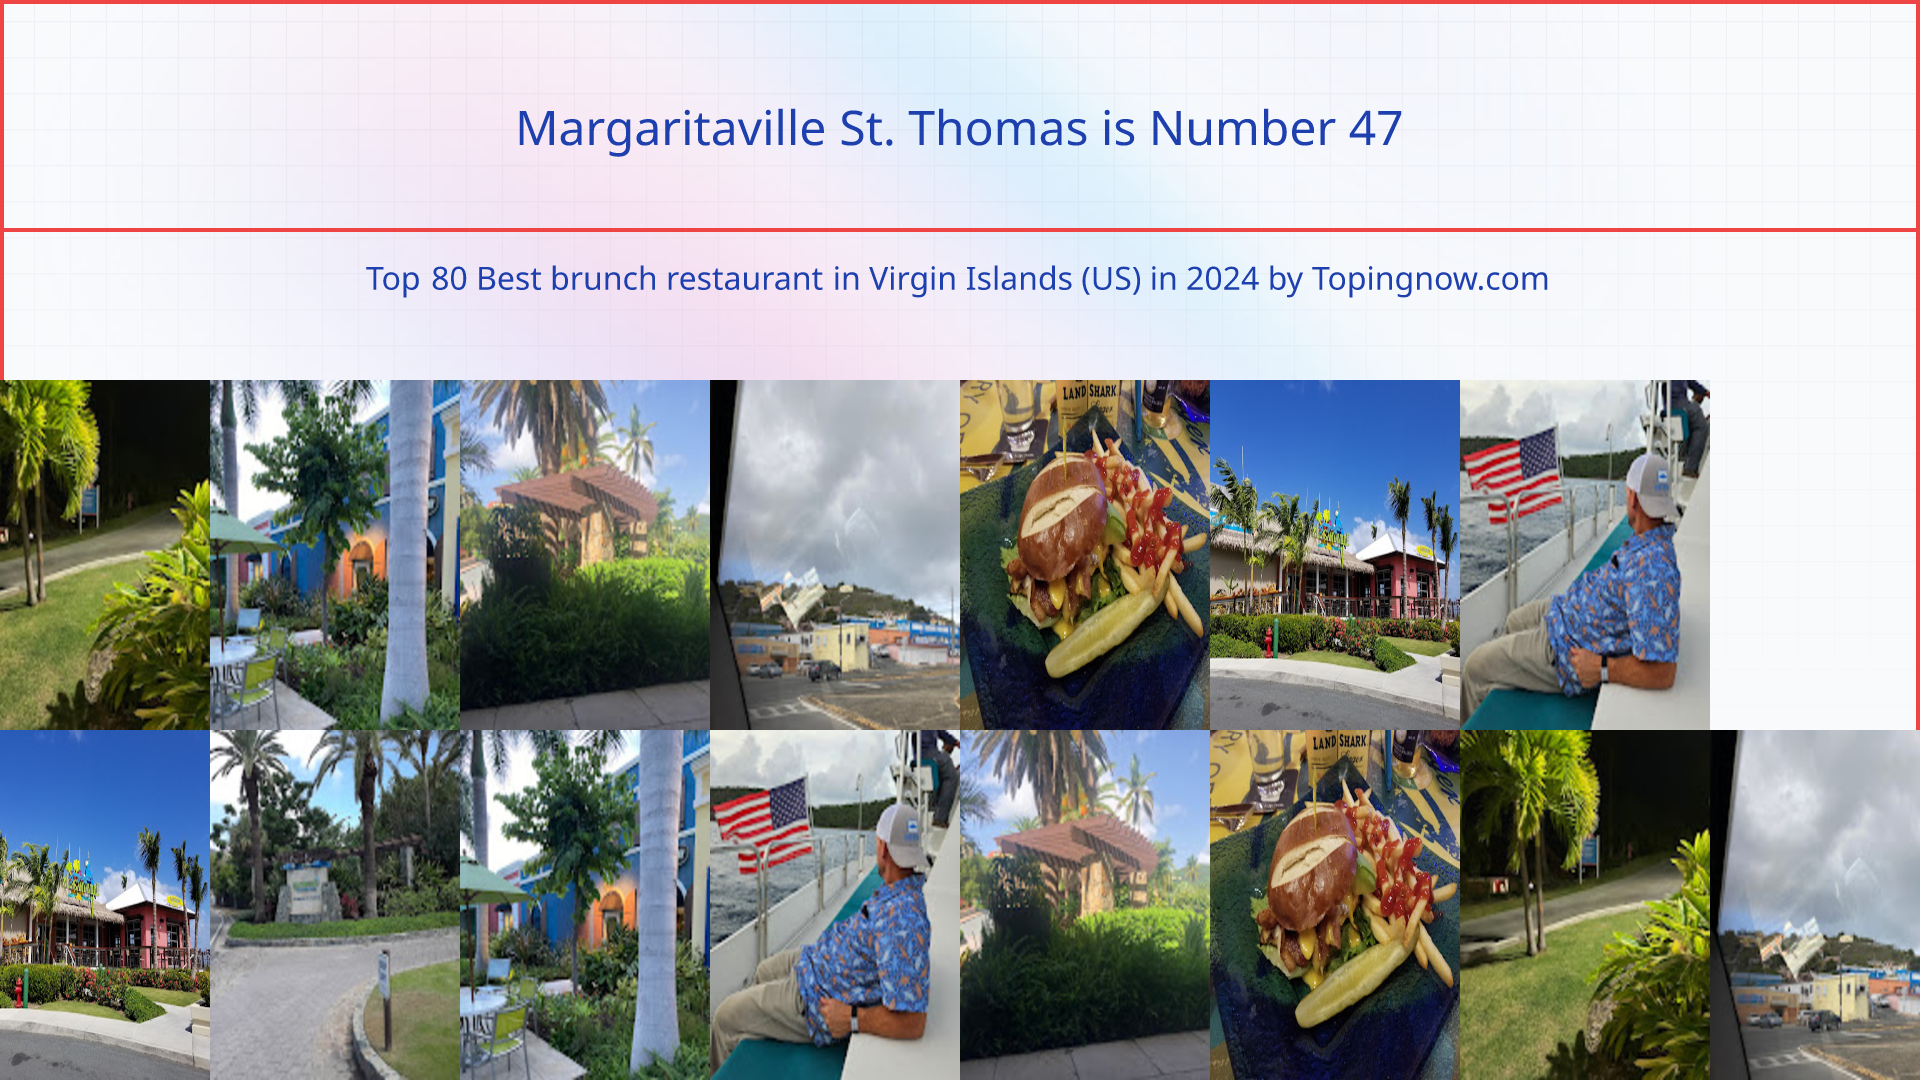 Margaritaville St. Thomas: Top 80 Best brunch restaurant in Virgin Islands (US) in 2024